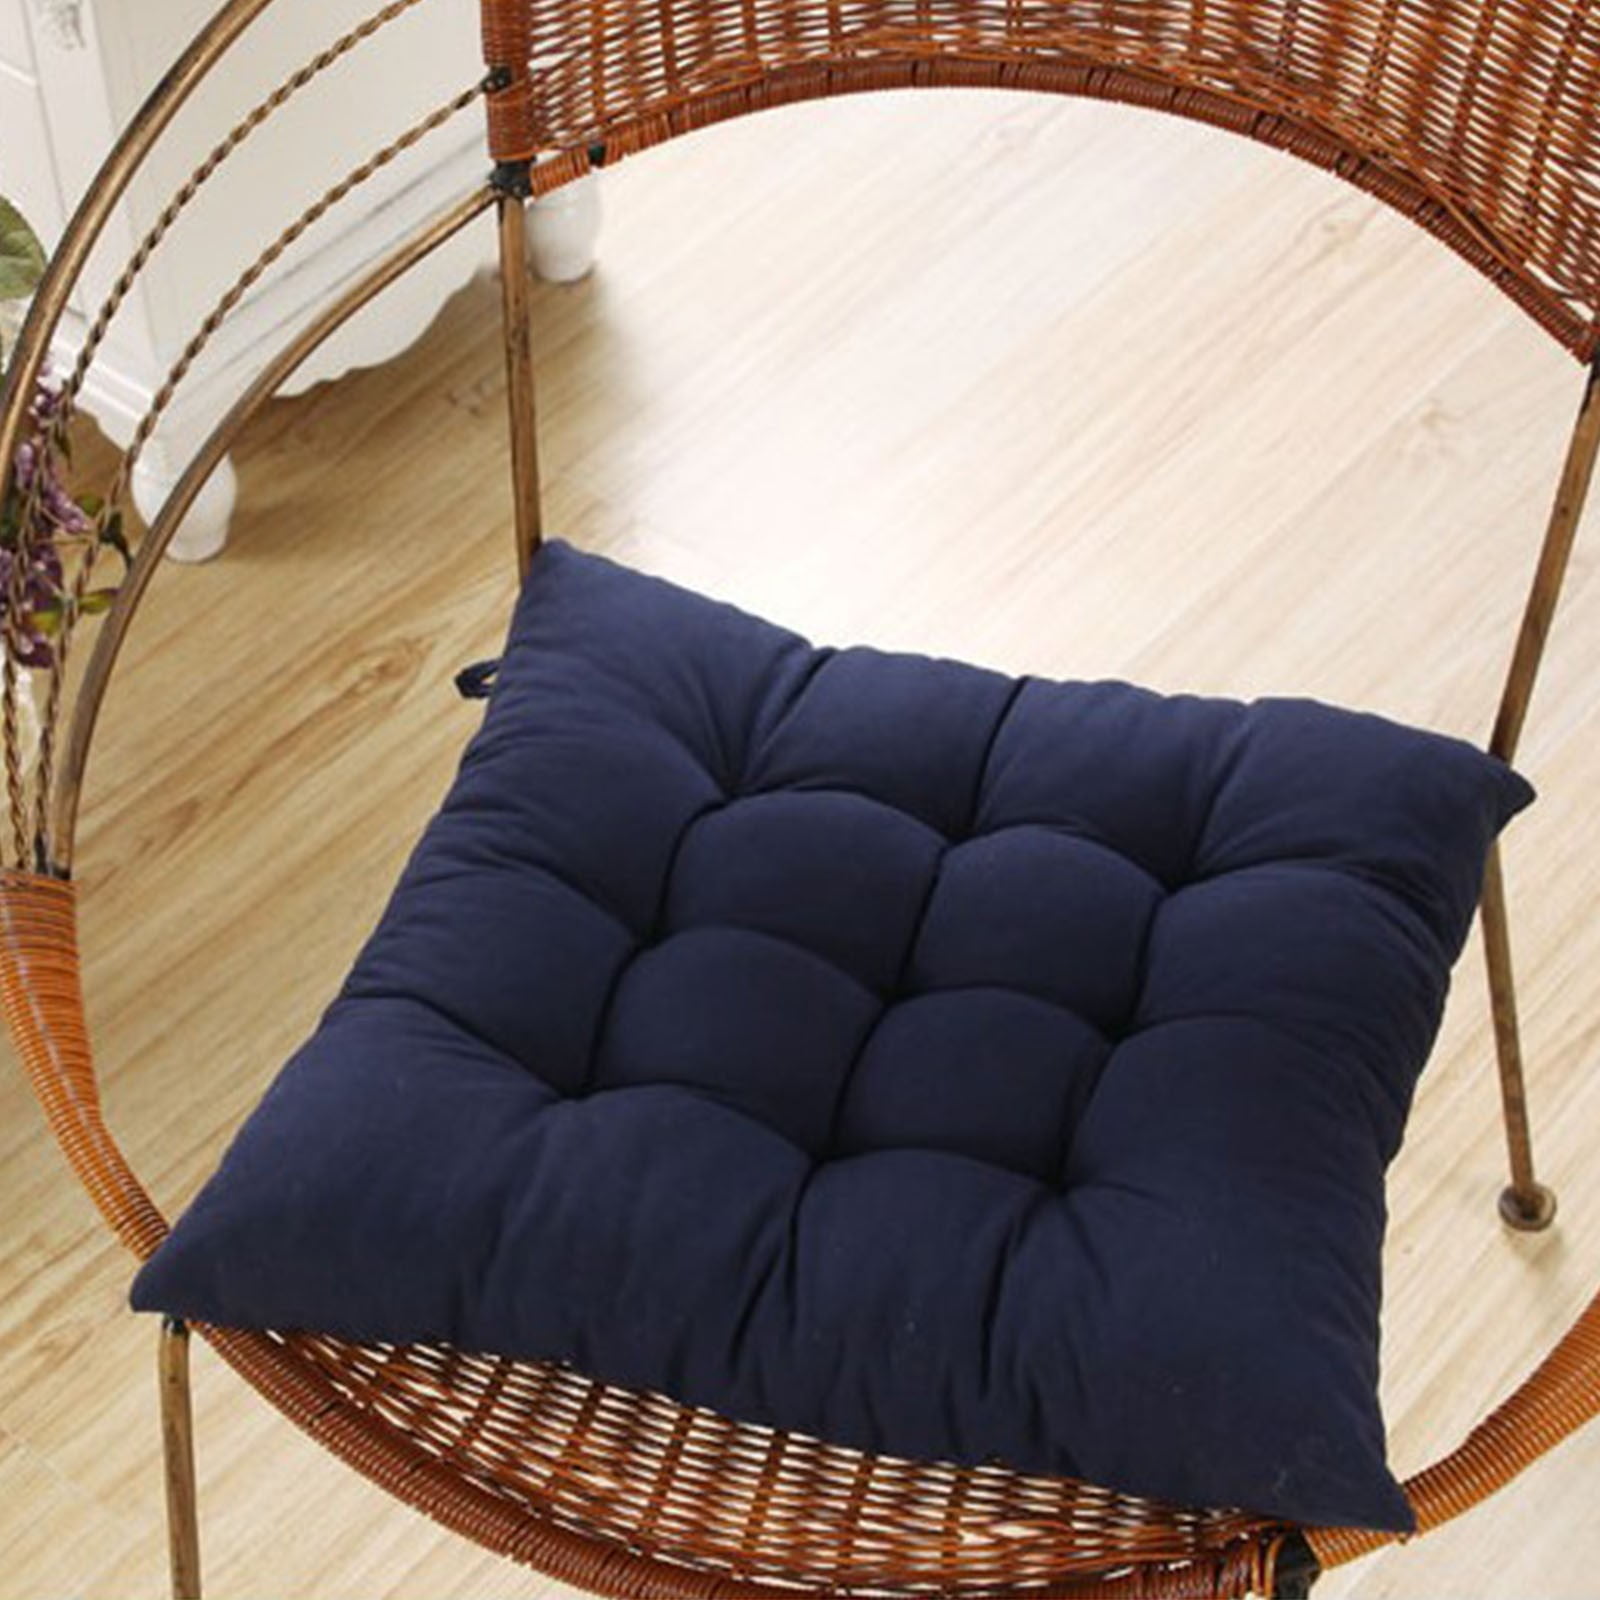 hoksml Christmas Clearance Deals Home Supplies Outdoor Garden Patio Home  Kitchen Office Sofa Chair Seat Soft Cushion Pad Bedding